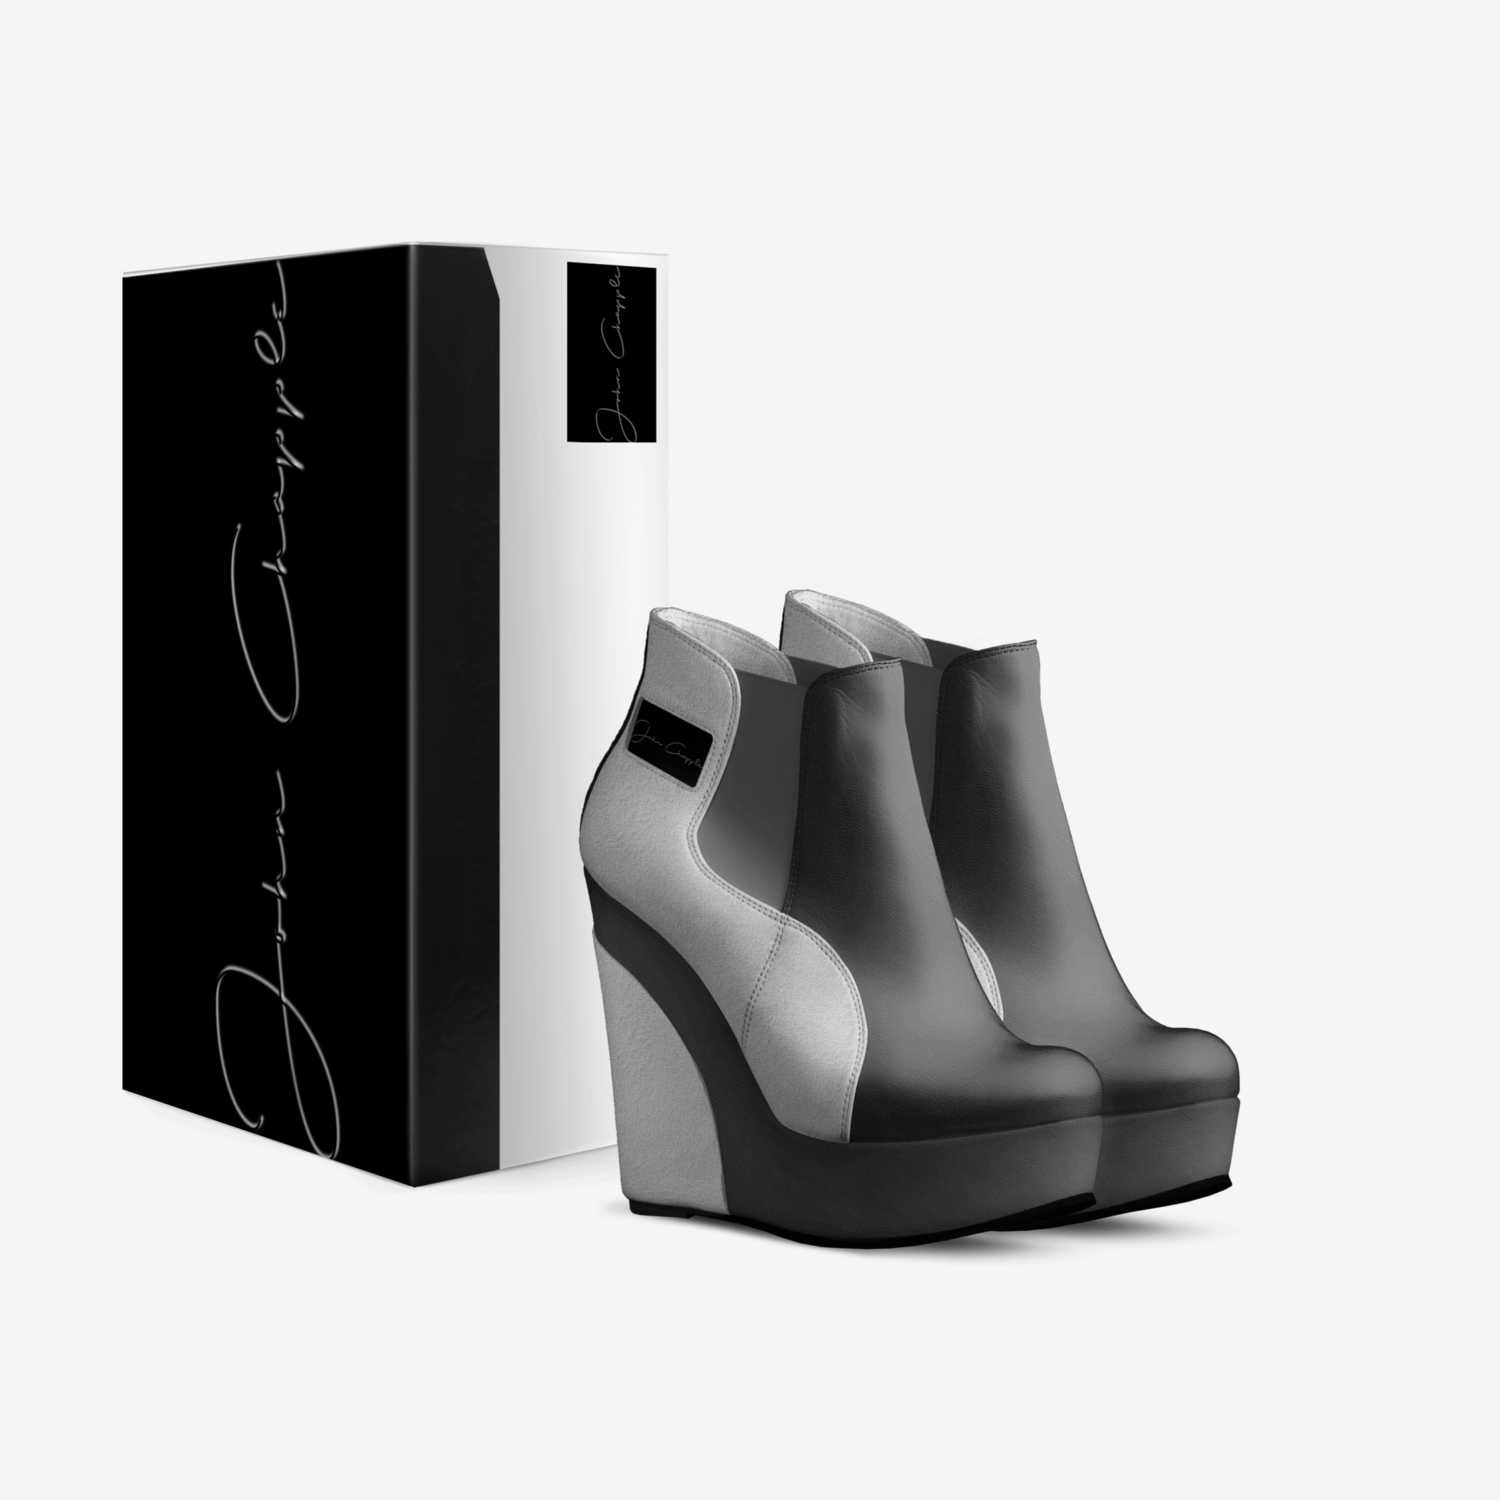 DRIPADACI custom made in Italy shoes by John Chapple | Box view